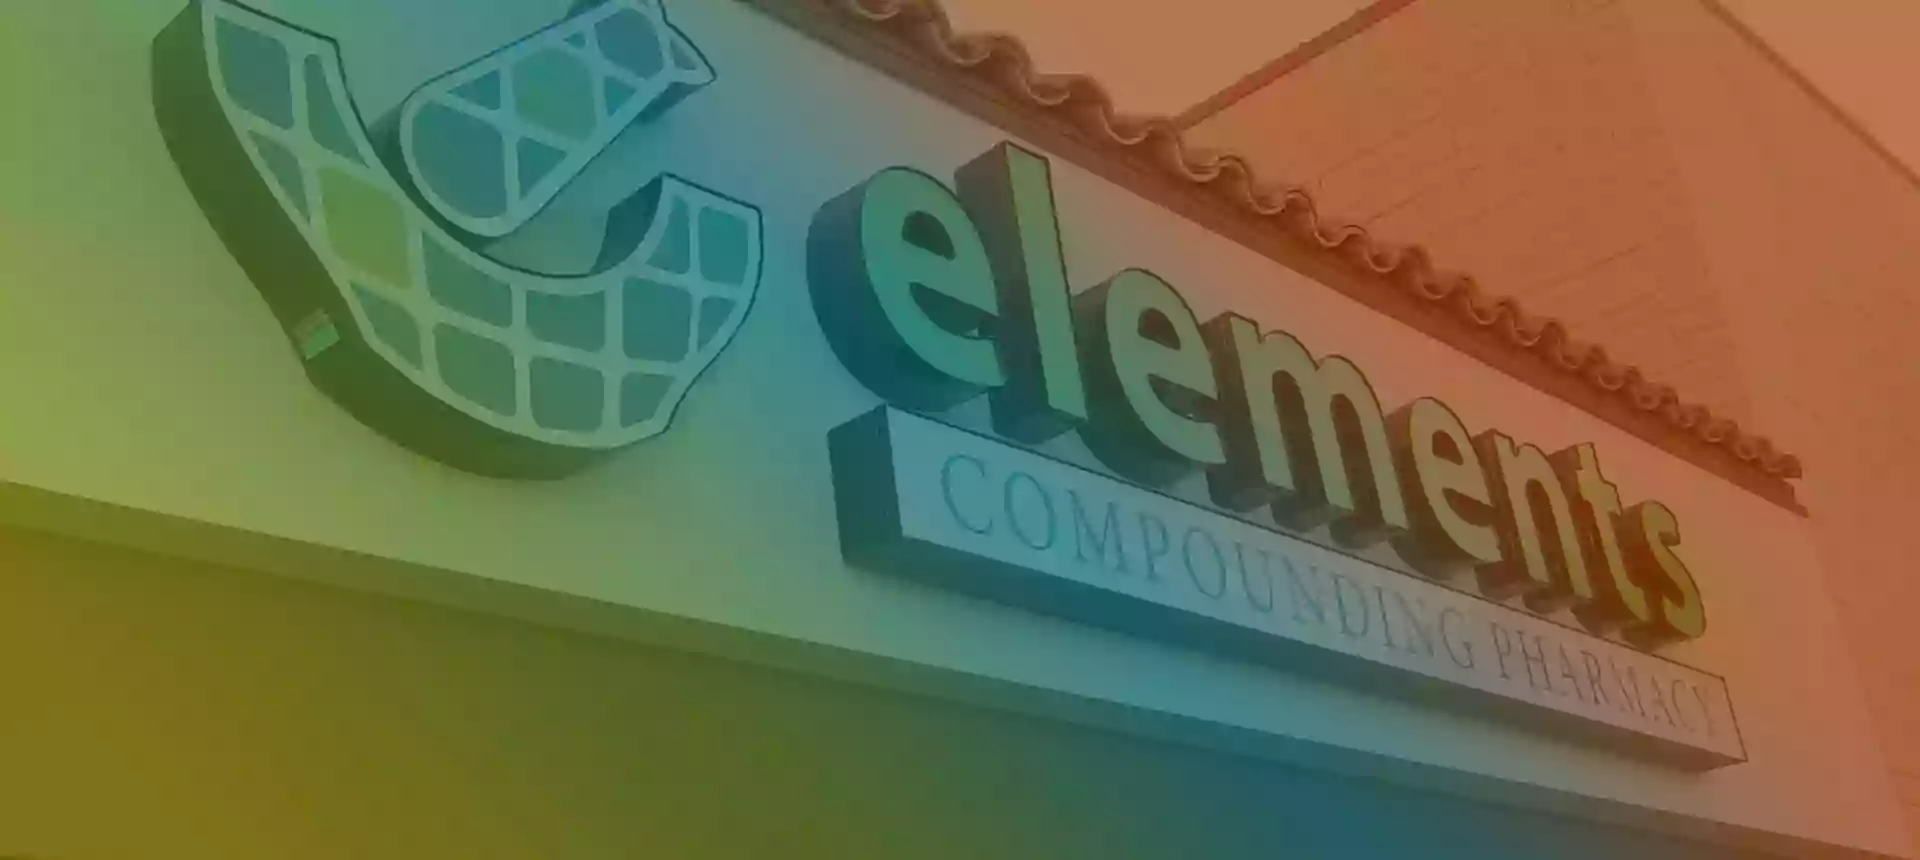 Elements Compounding Pharmacy